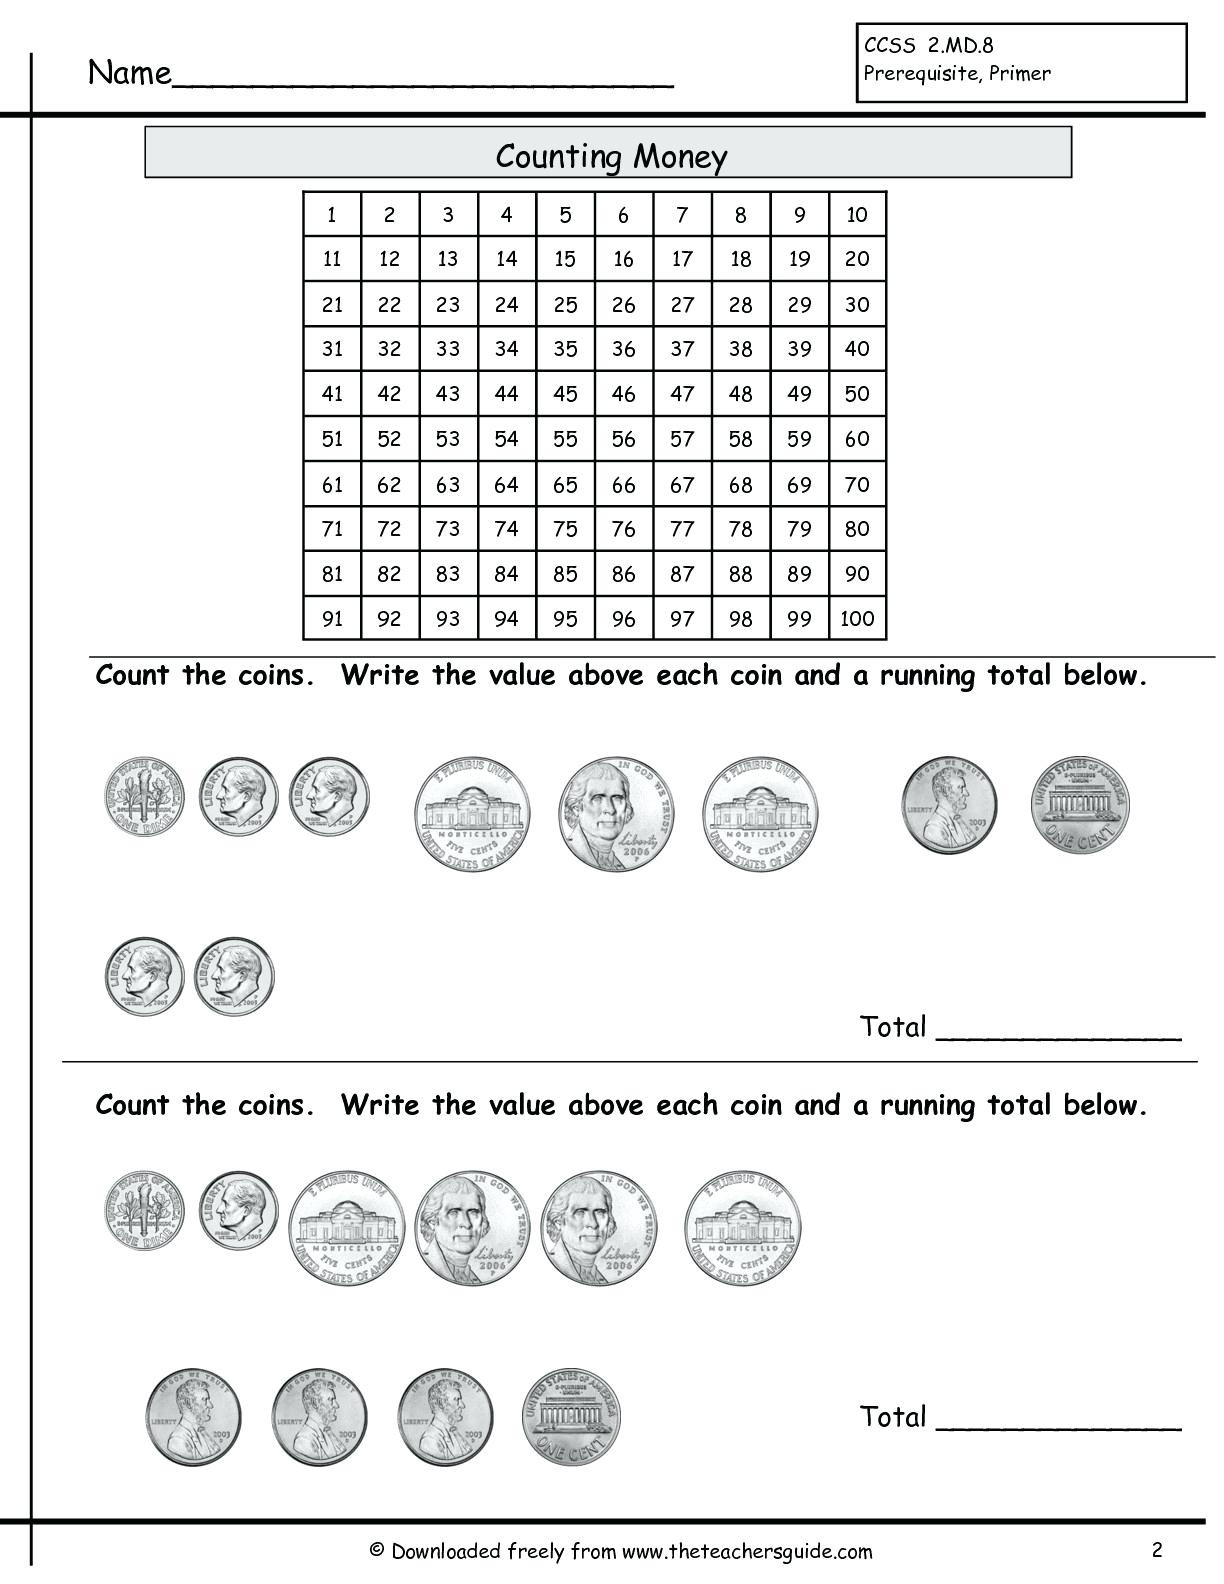 identifying coins worksheets pdf math counting coins worksheet matthias schleiden